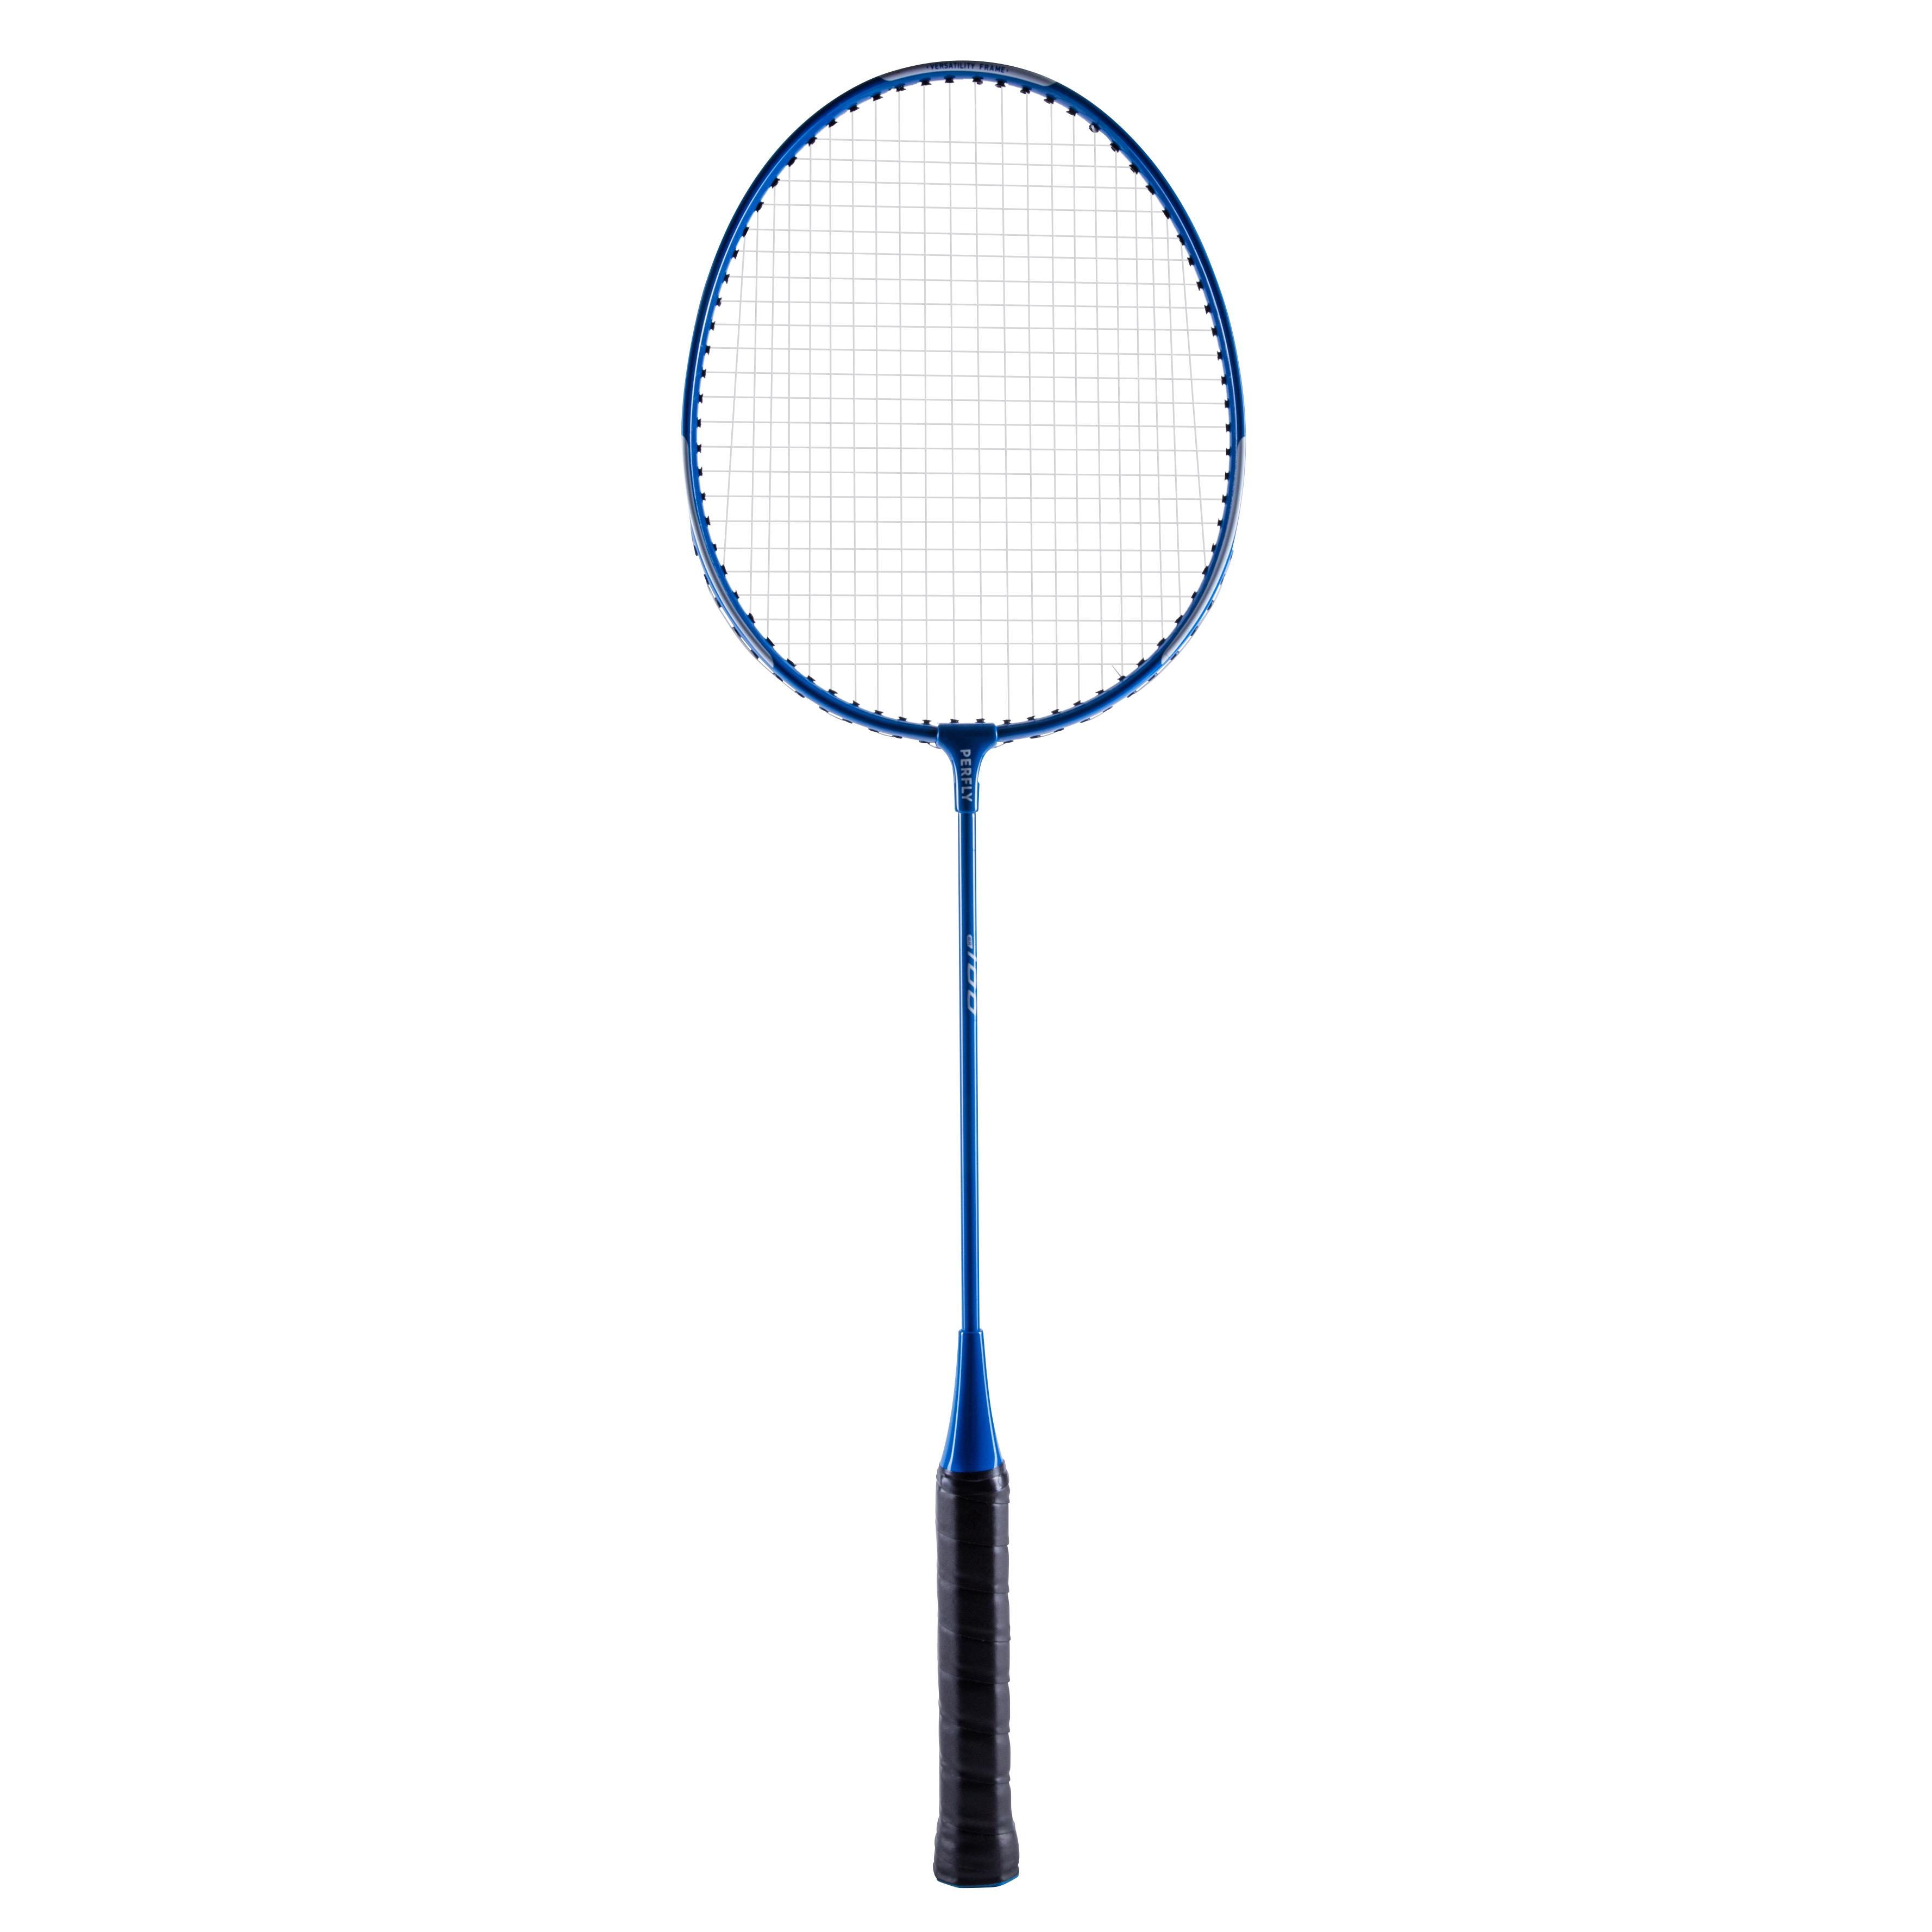 Buy Adult Badminton Racket Br 100 Blue Online Decathlon